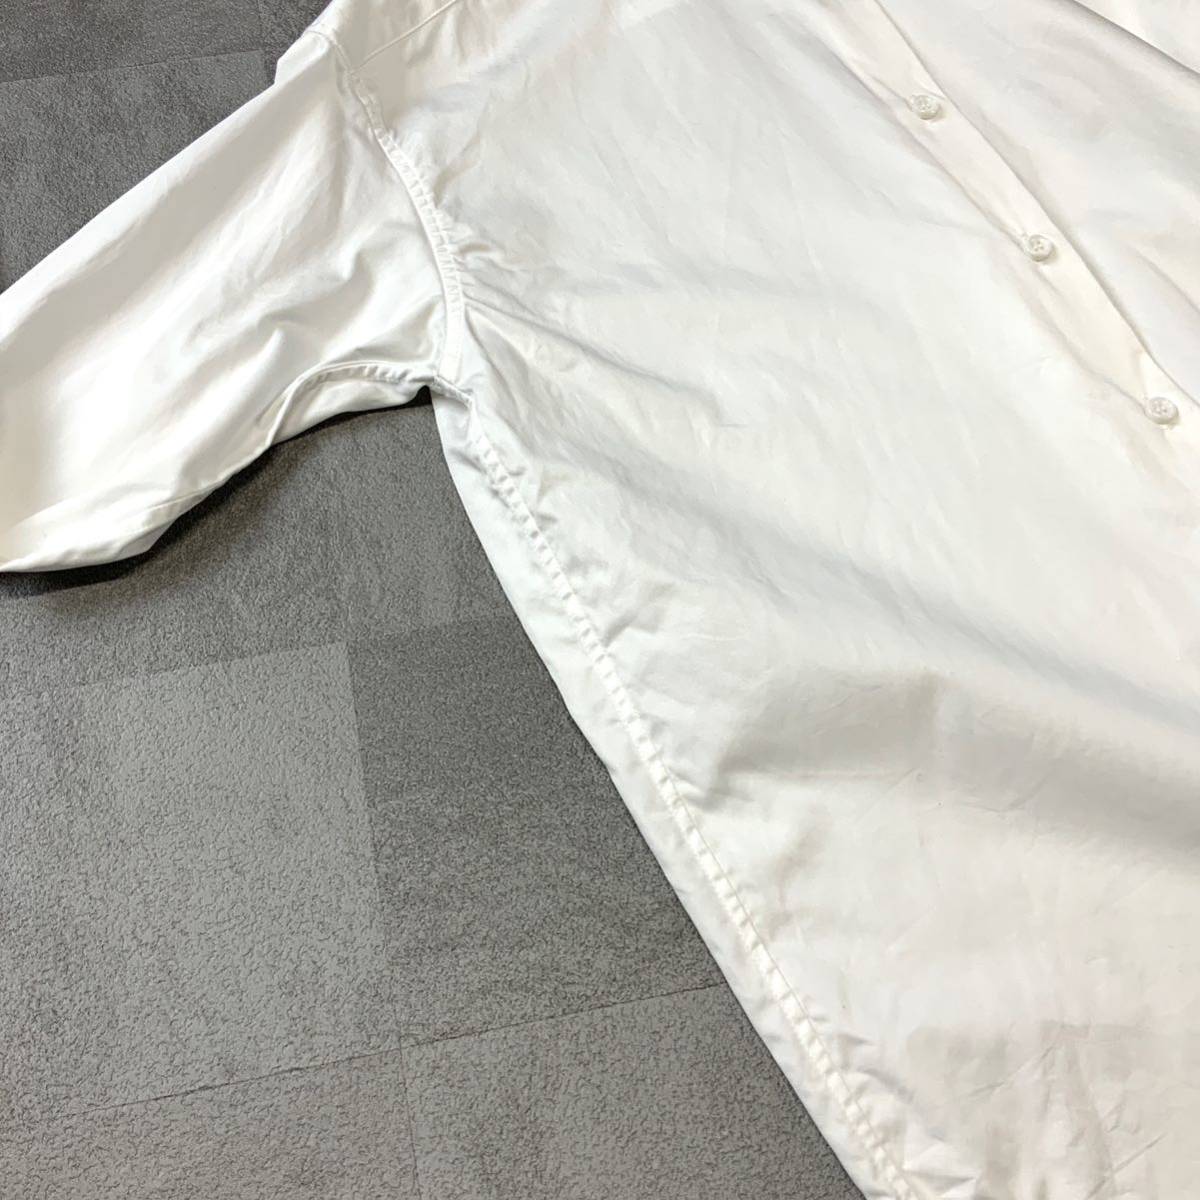  new goods tag attaching BLENHEIMb Len partition m oversize shirt lady's S size largish white Italy made cloth dress shirt 